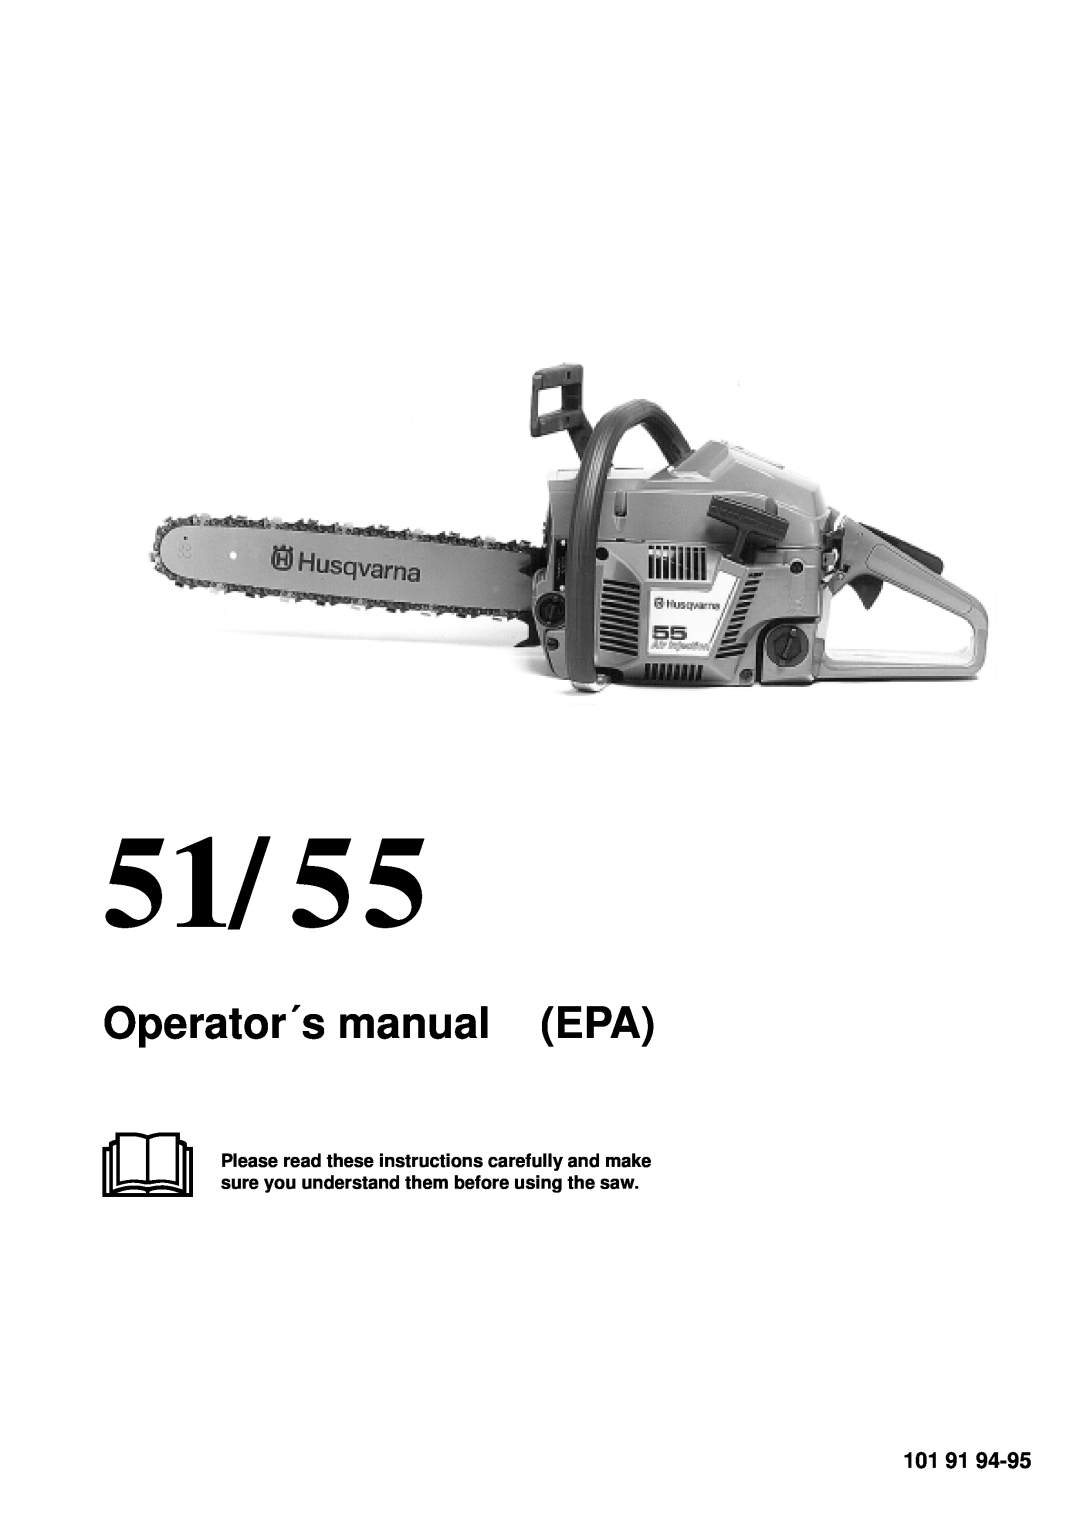 Husqvarna manual 51/55, Operator´s manual EPA, 101 91 